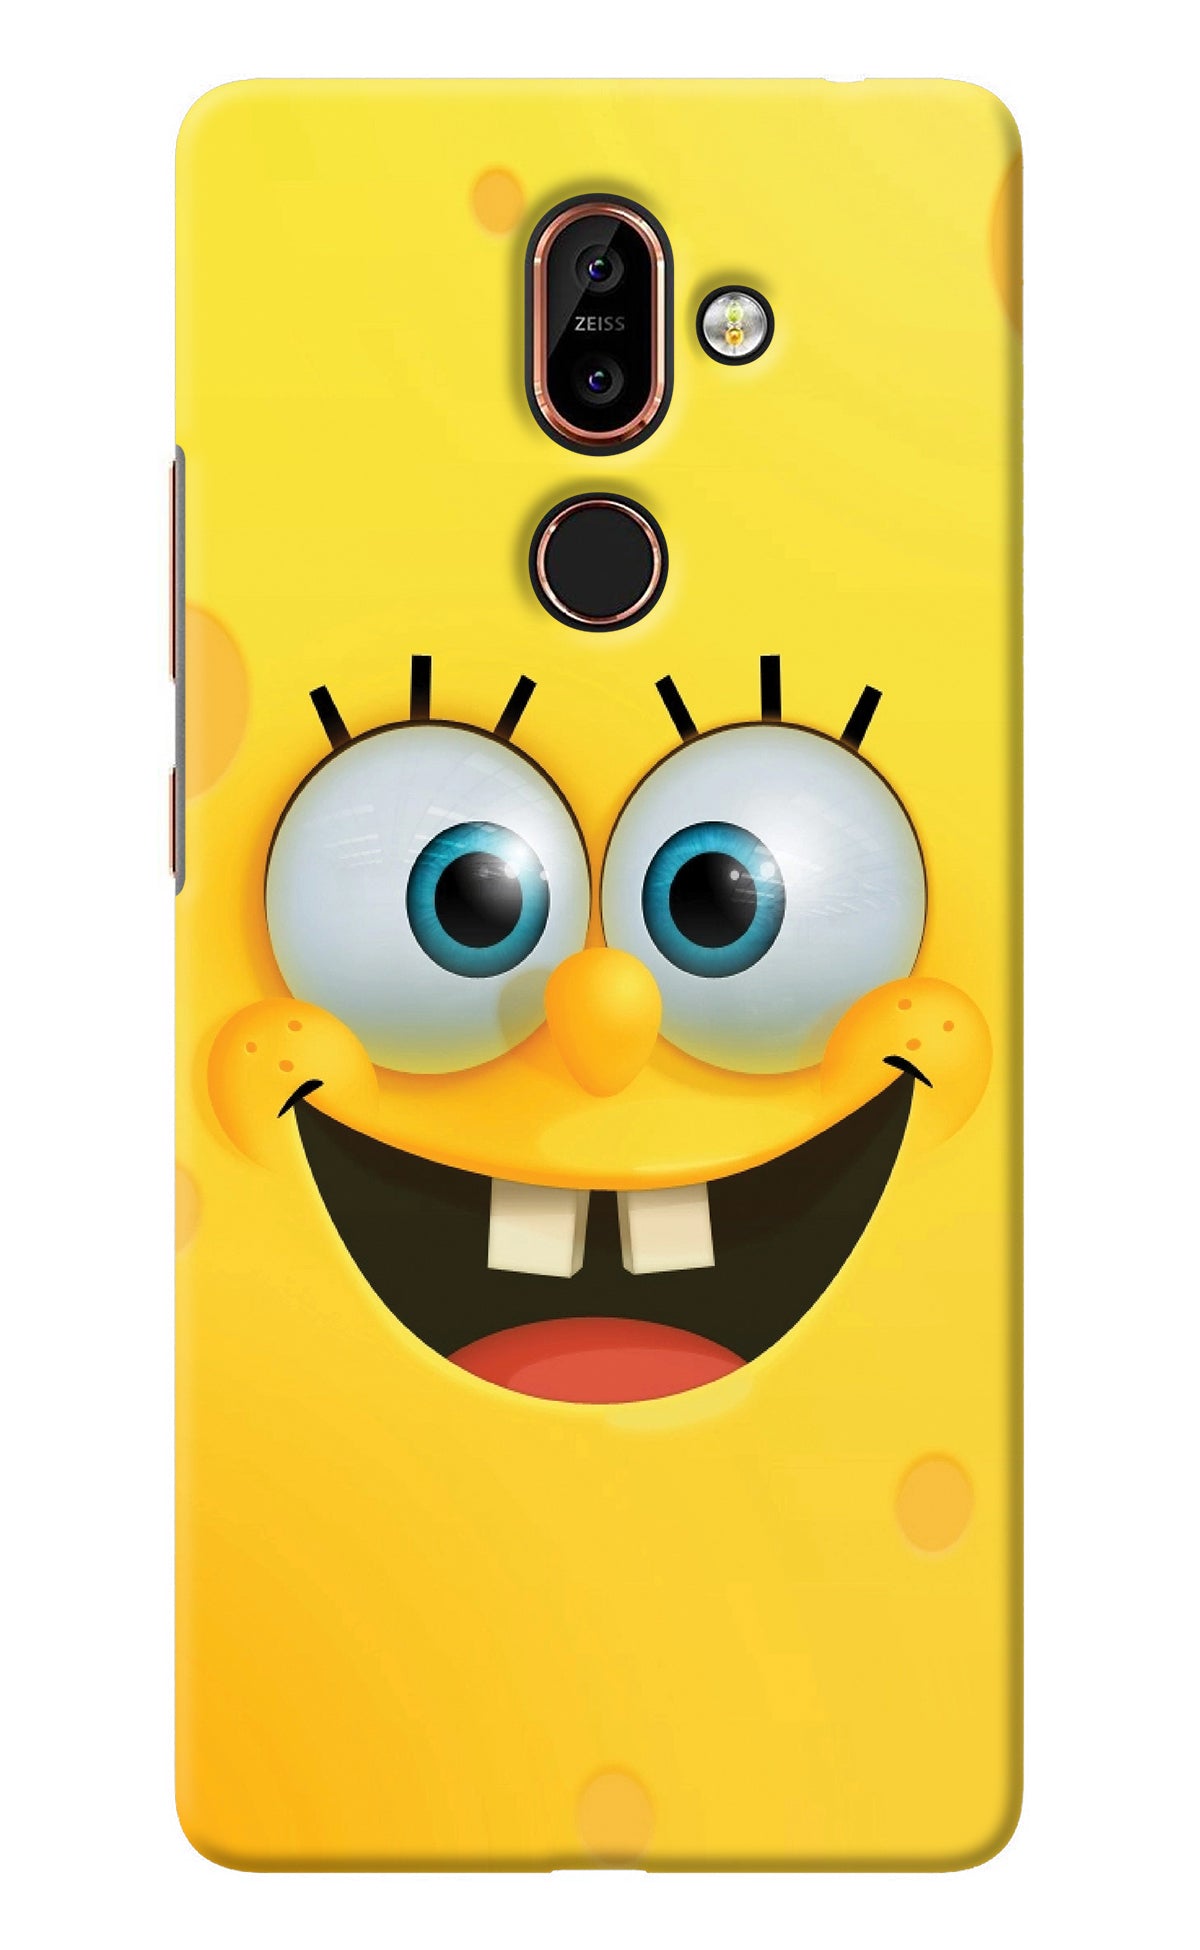 Sponge 1 Nokia 7 Plus Back Cover